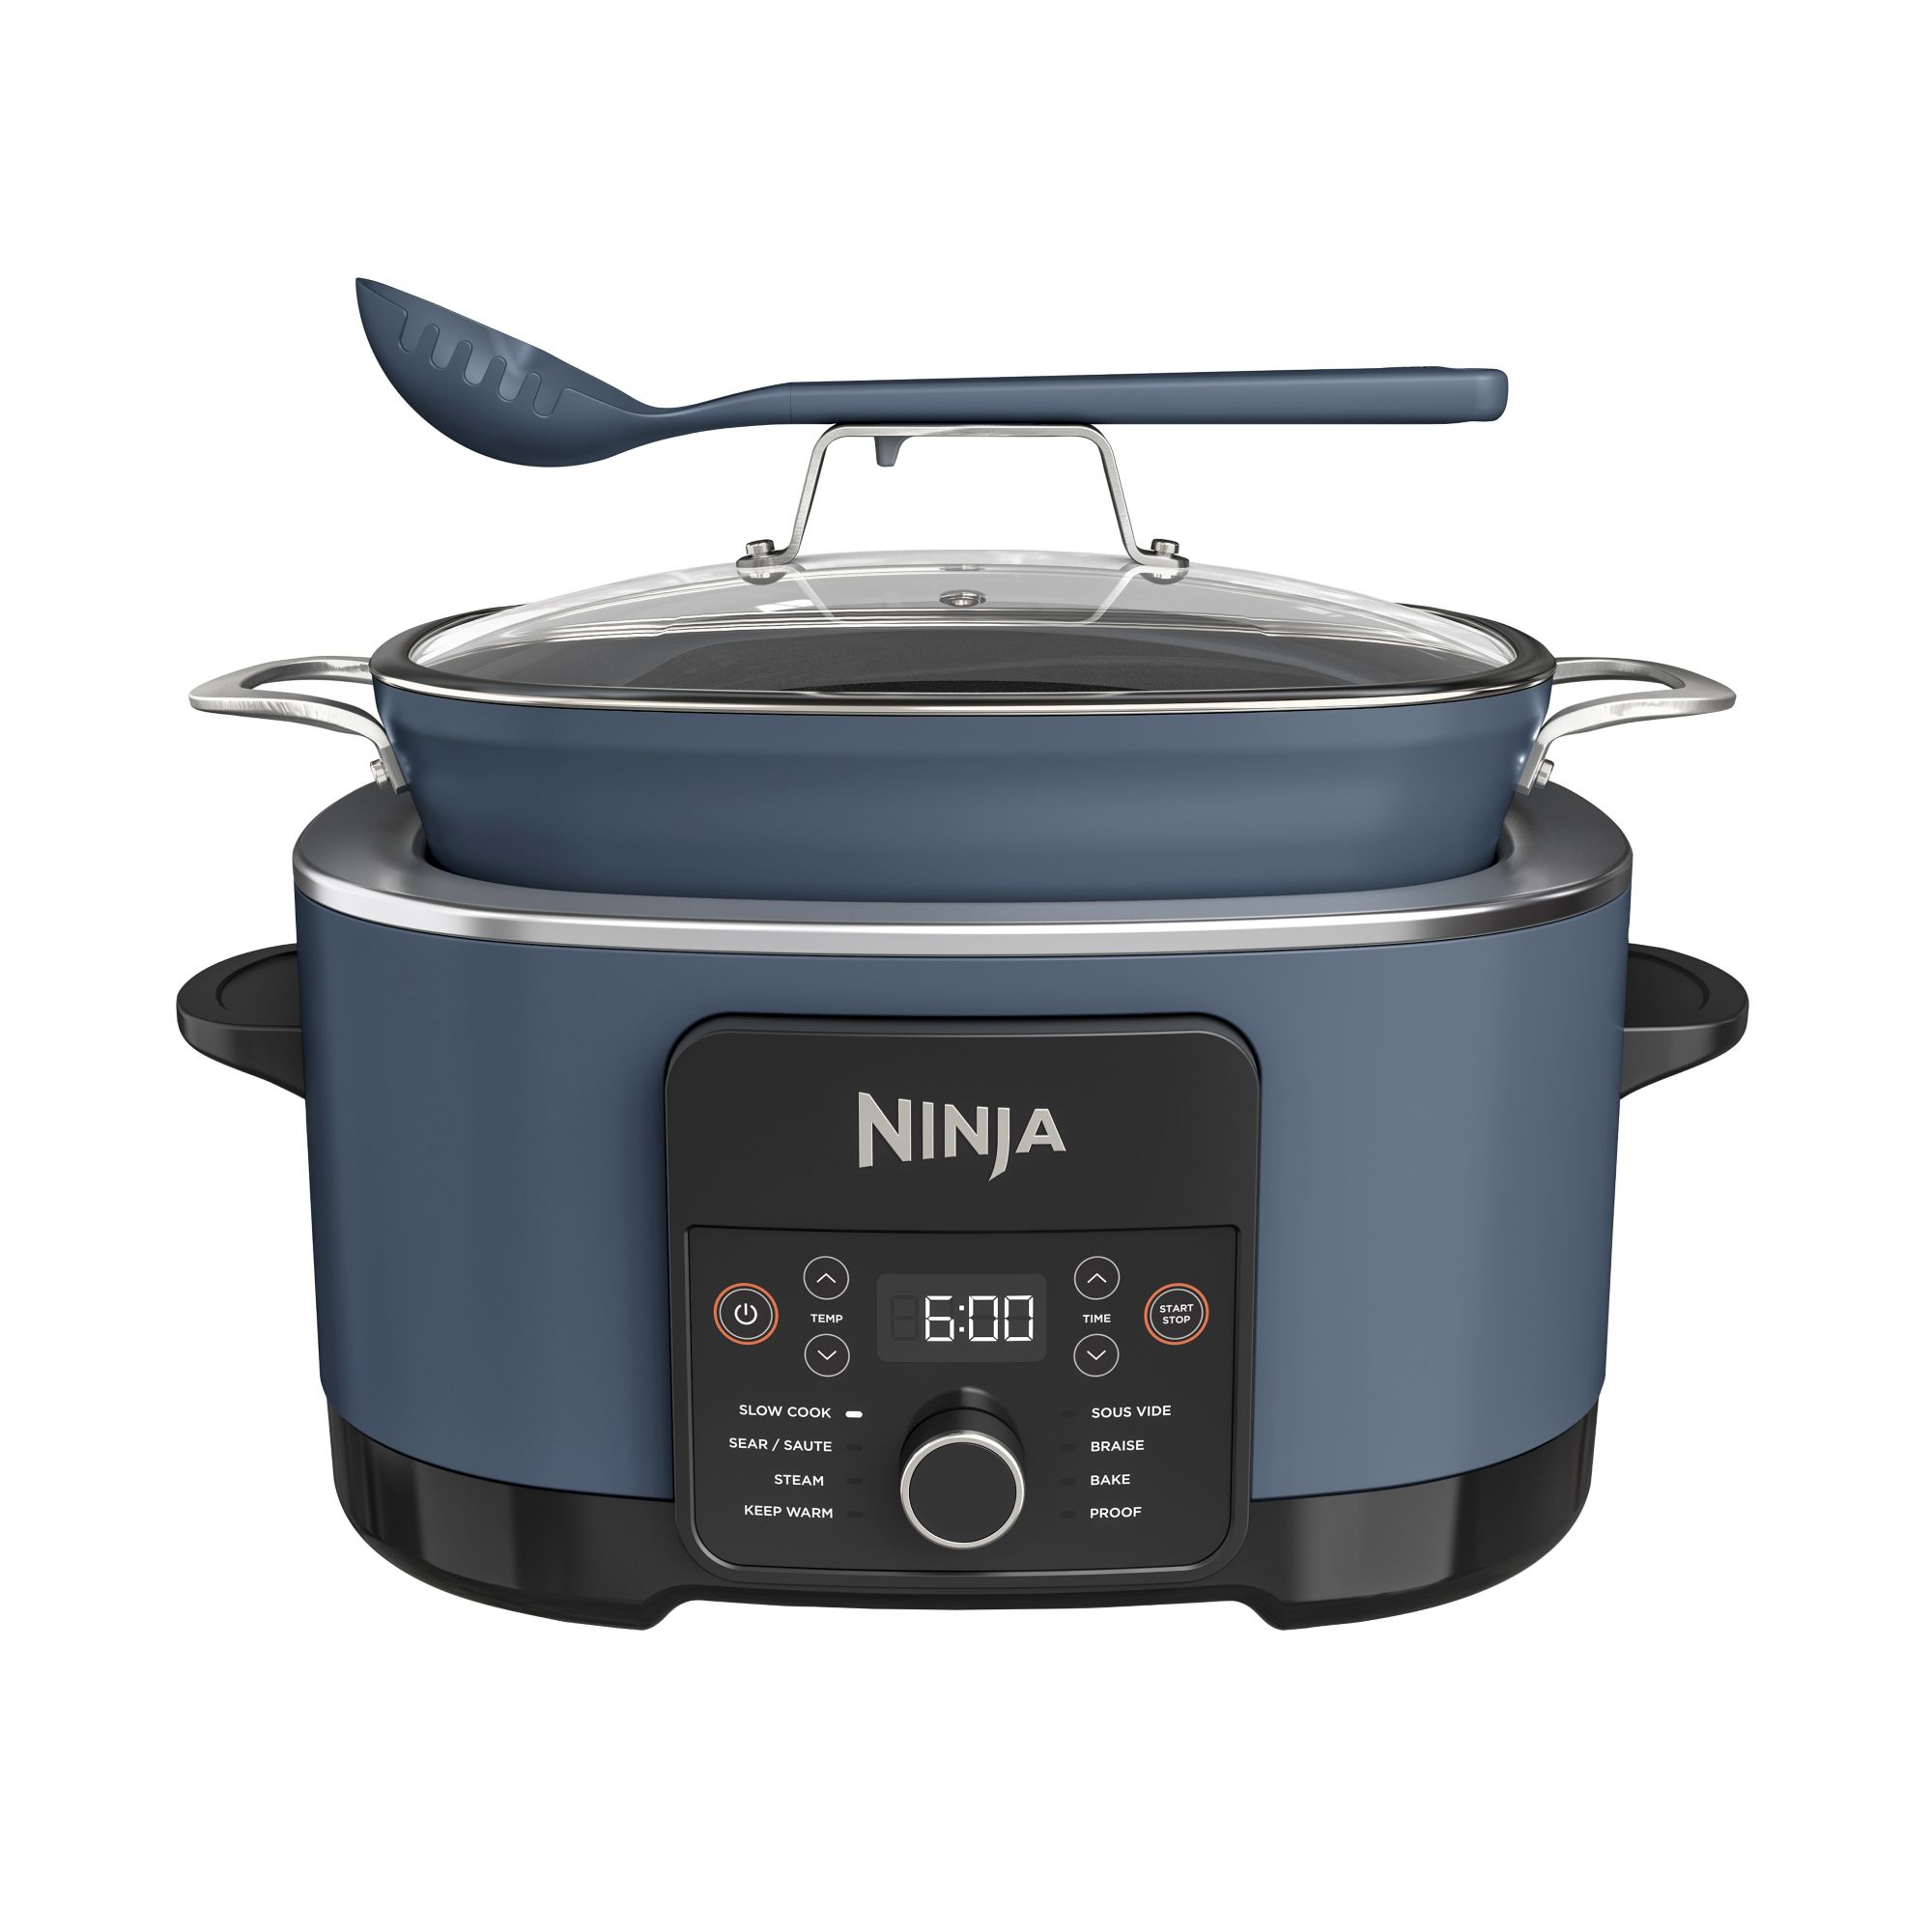 Ninja MC1001 Foodi PossibleCooker PRO 8.5 Quart Multi-Cooker, with